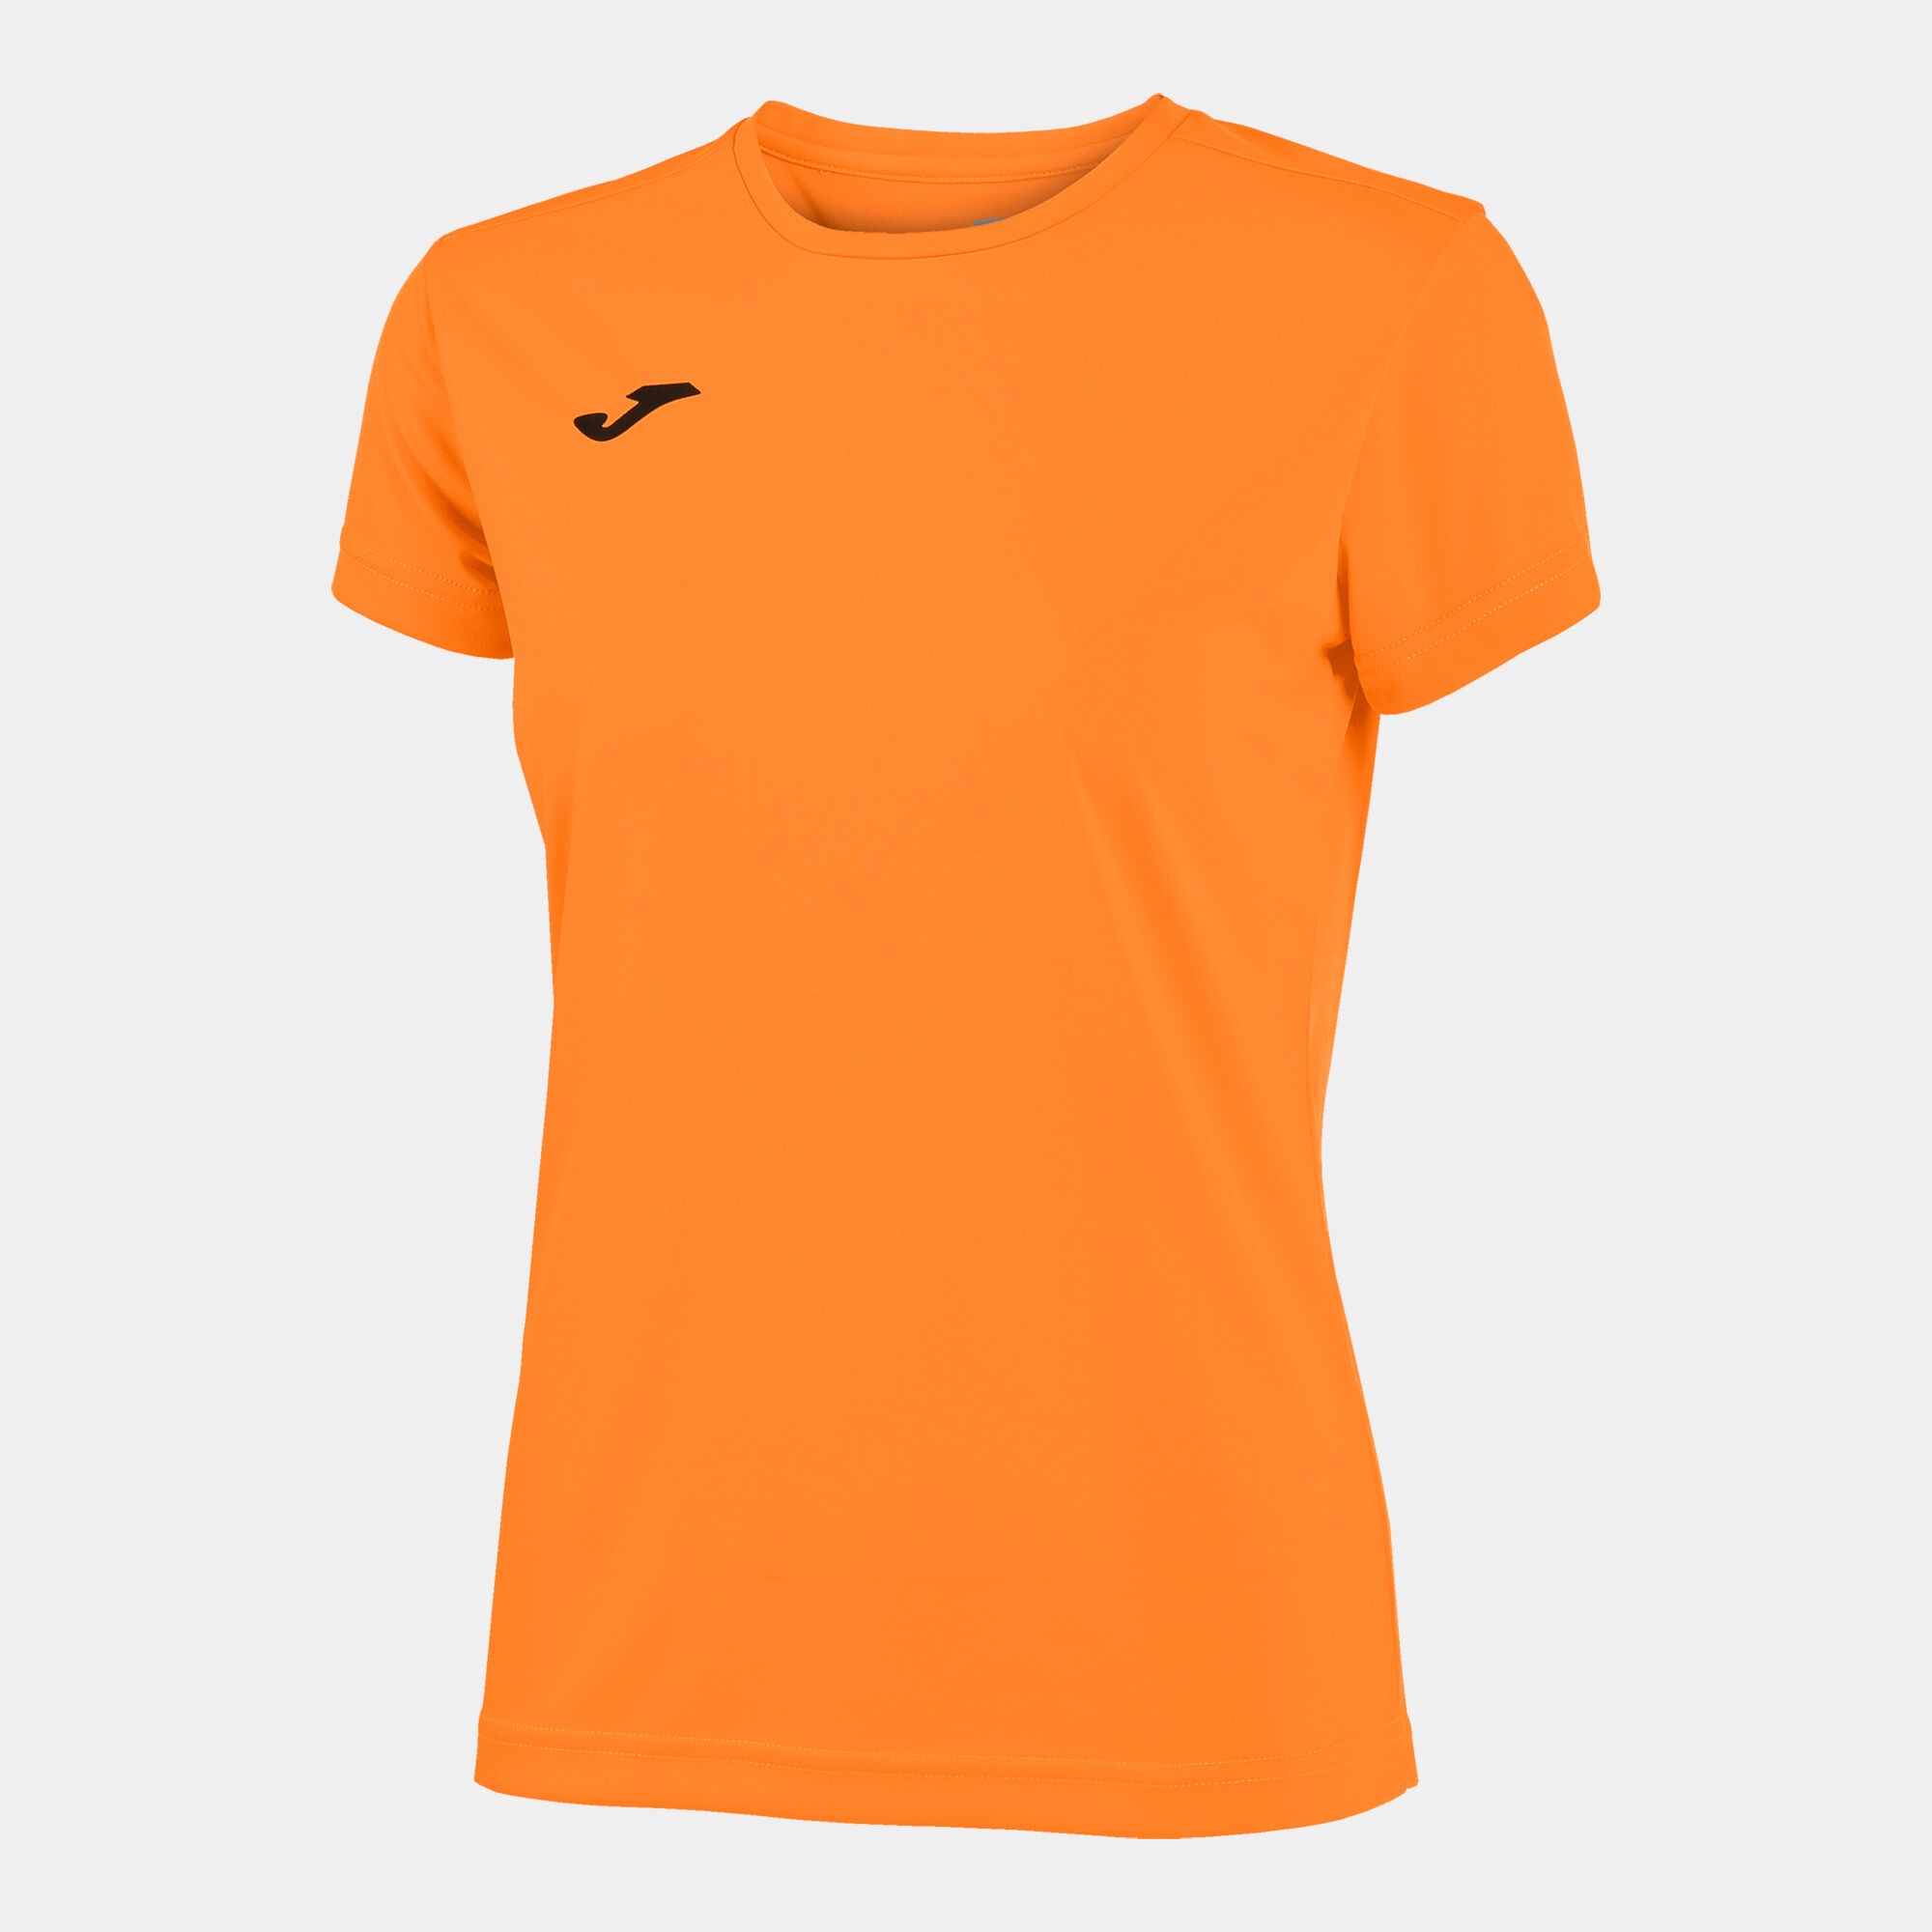 Camiseta manga corta mujer Combi naranja flúor